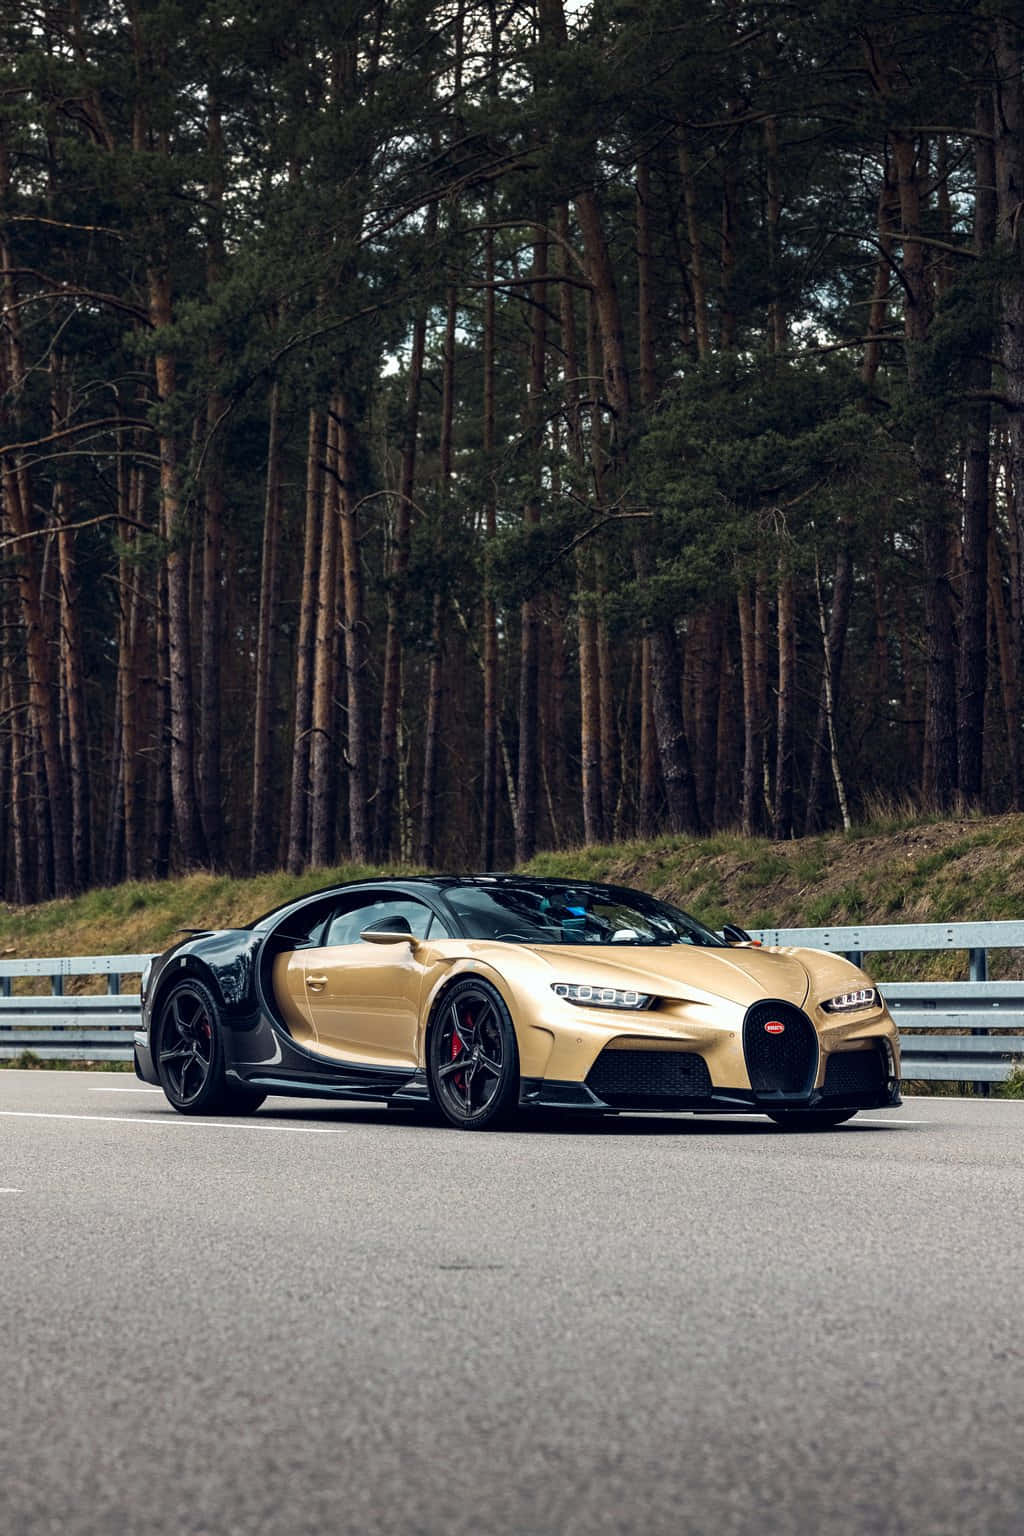 "The Luxury of Speed - The Bugatti"